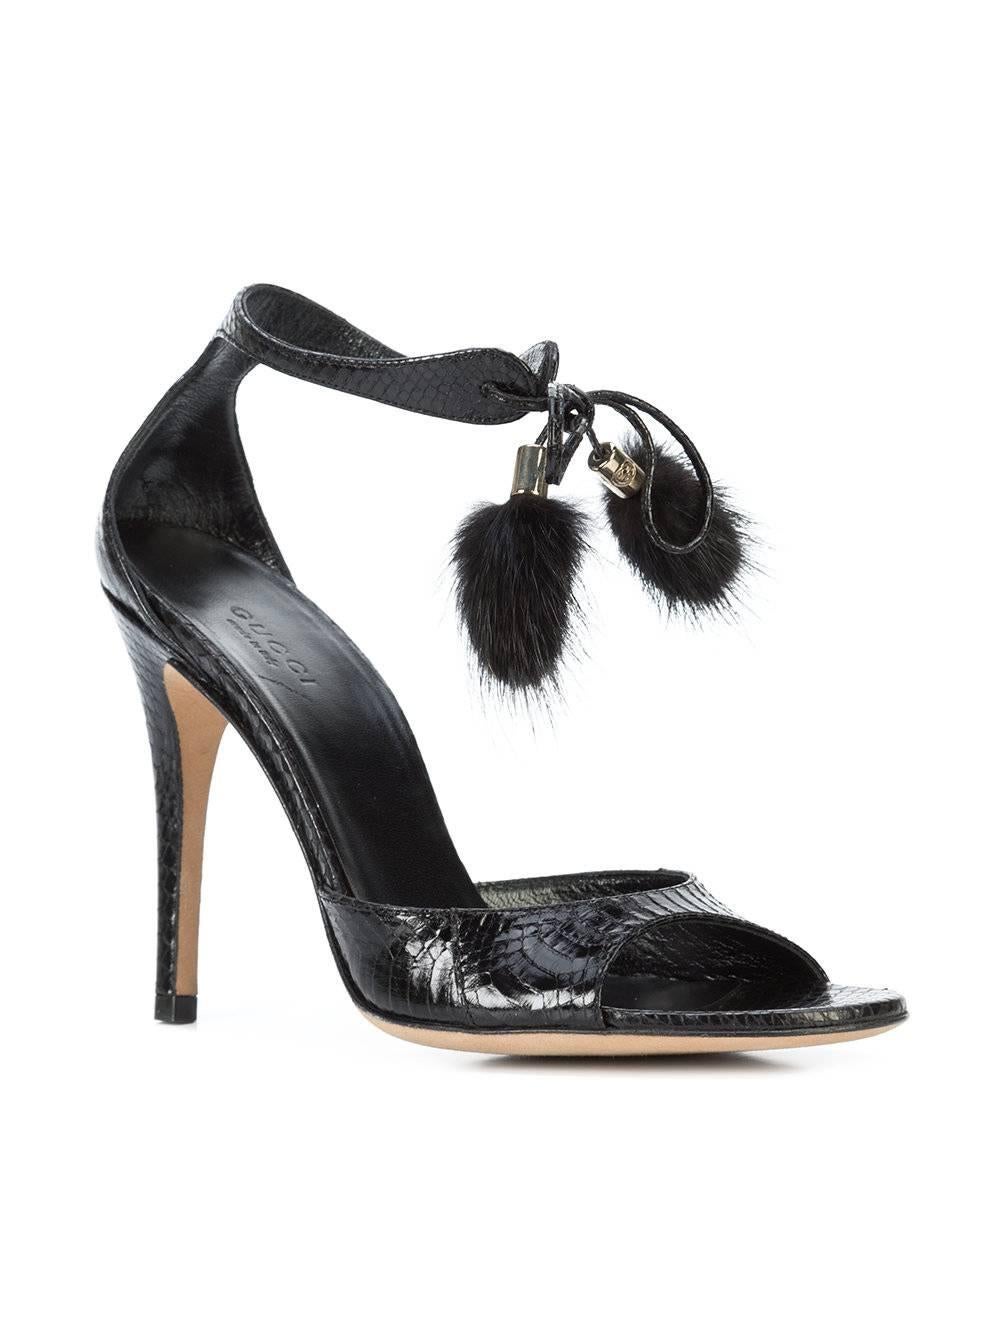 Gucci New Black Embossed Snakeskin Fur Pom Pom Evening Sandals Heels in Box

Size IT 36
Embossed snakeskin
Fur (Mink)
Ankle tie closure
Made in Italy
Heel height 4